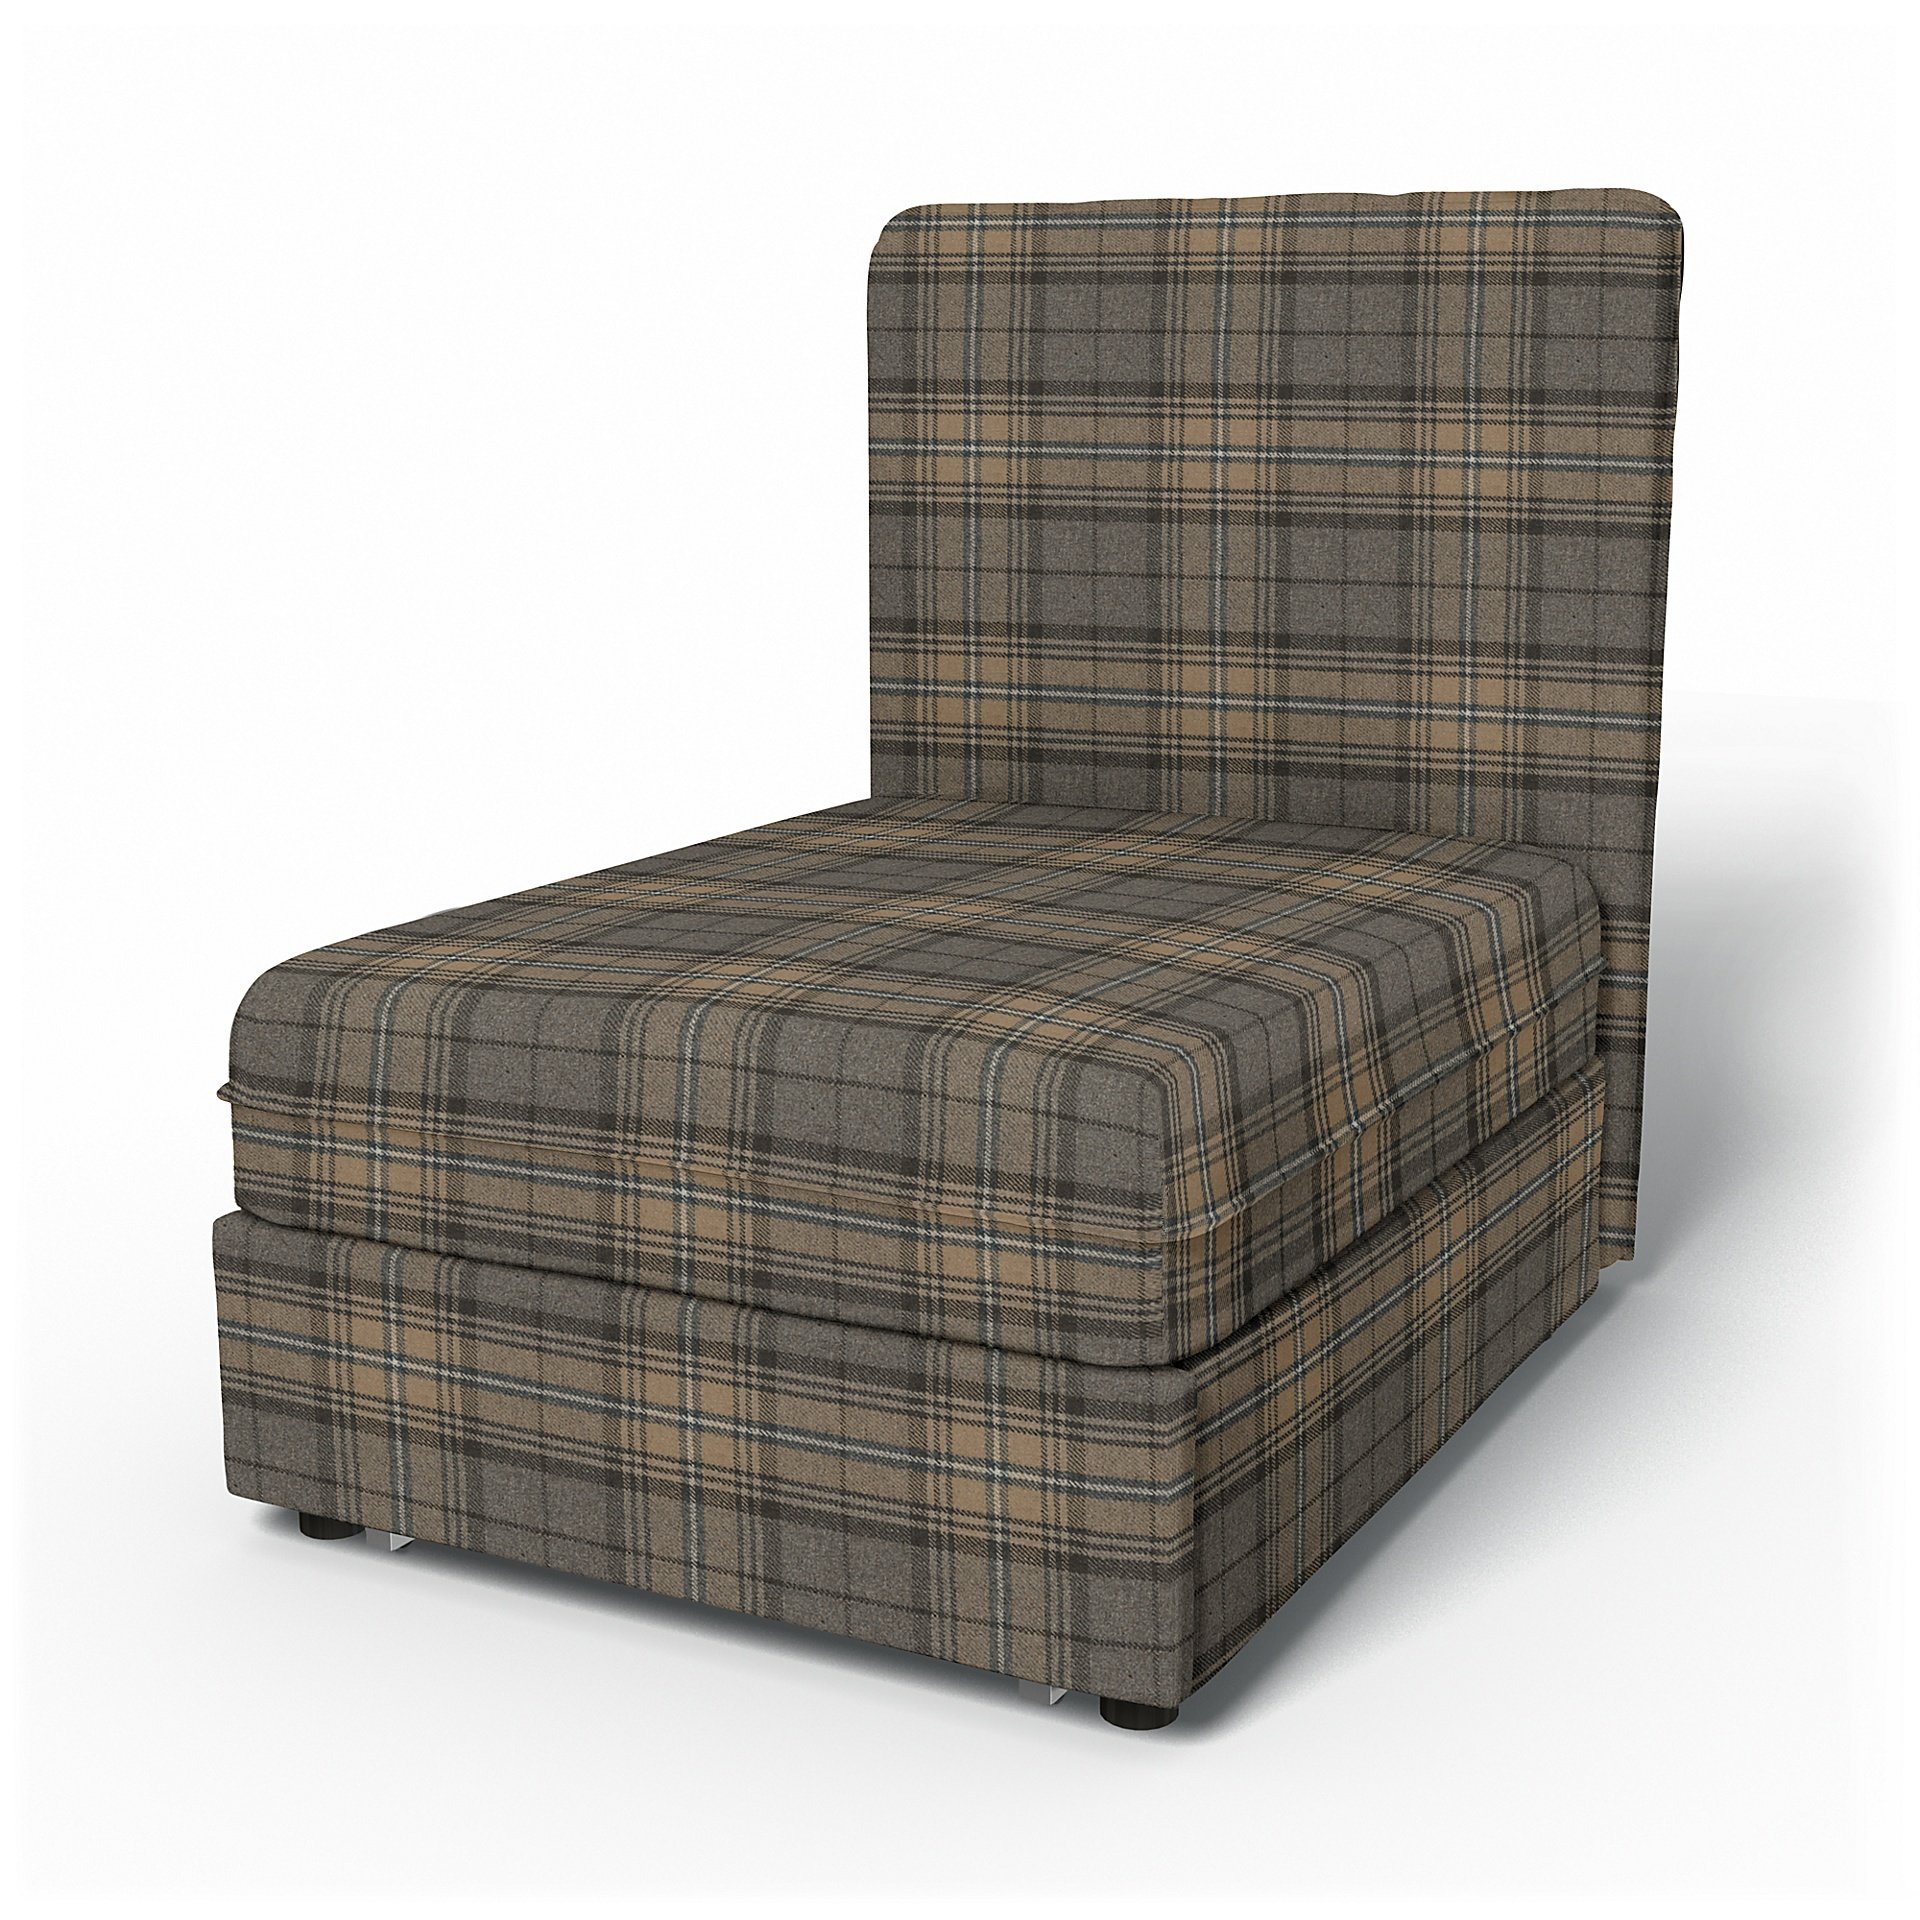 IKEA - Vallentuna Seat Module with High Back Sofa Bed Cover (80x100x46cm), Bark Brown, Wool - Bemz